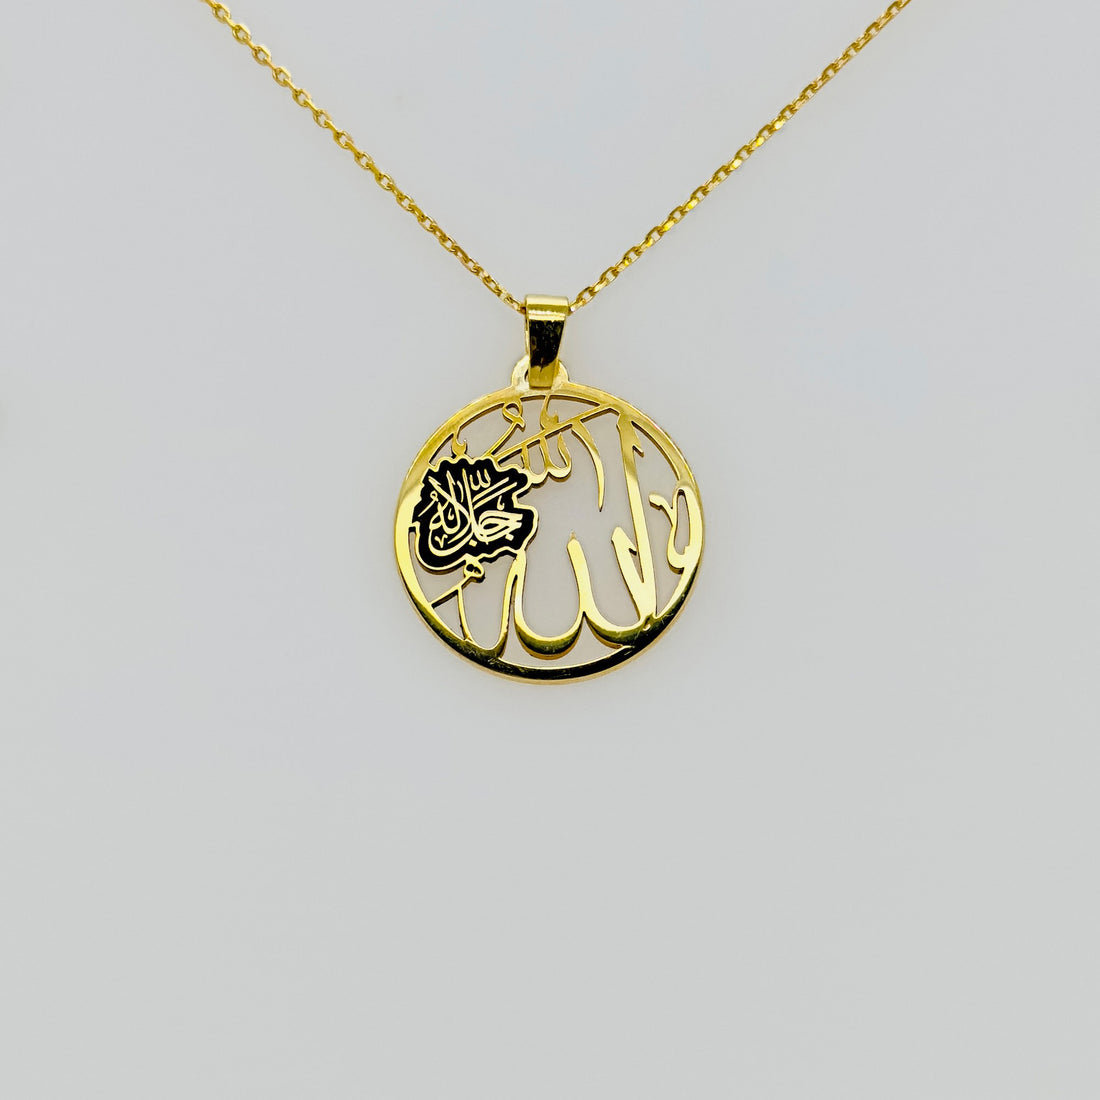 islamic-jewelry-allah-written-circular-islamic-necklace-18k-gold-pendant-on-925-silver-elegant-gold-finish-spiritual-art-shukranislamicart